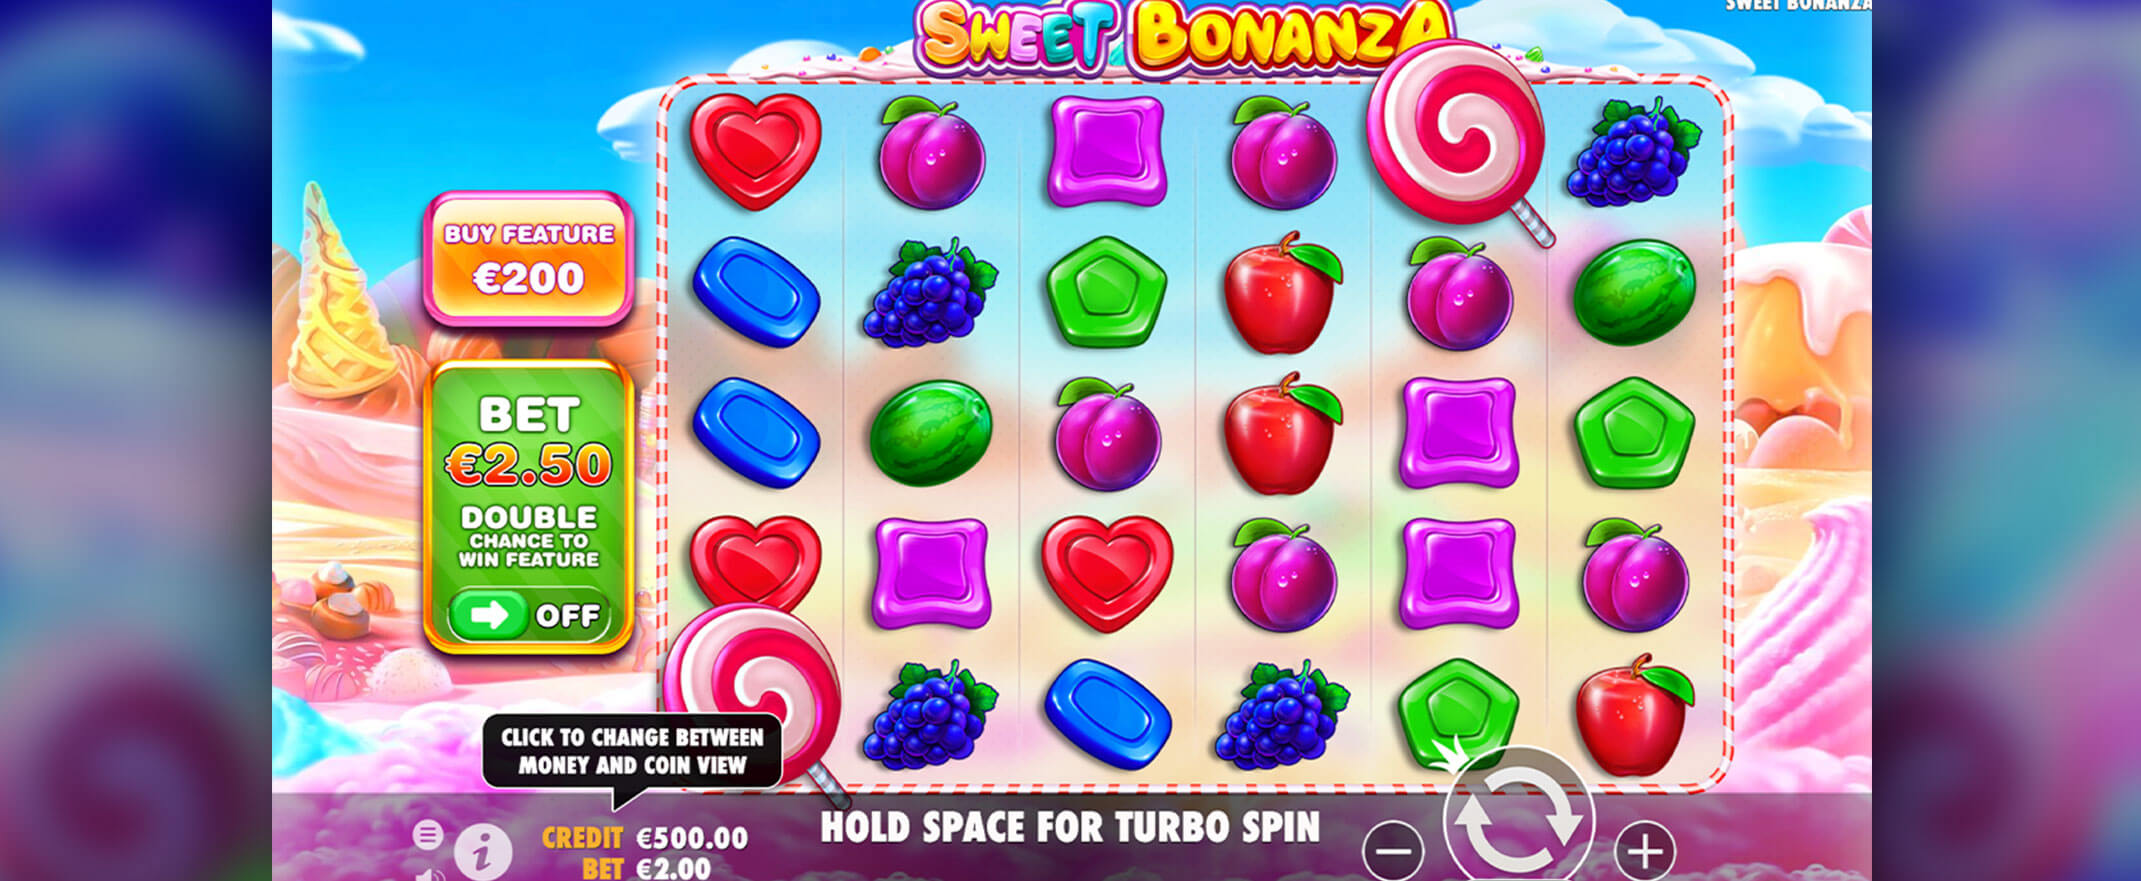 Sweet Bonanza slot from Pragmatic Play